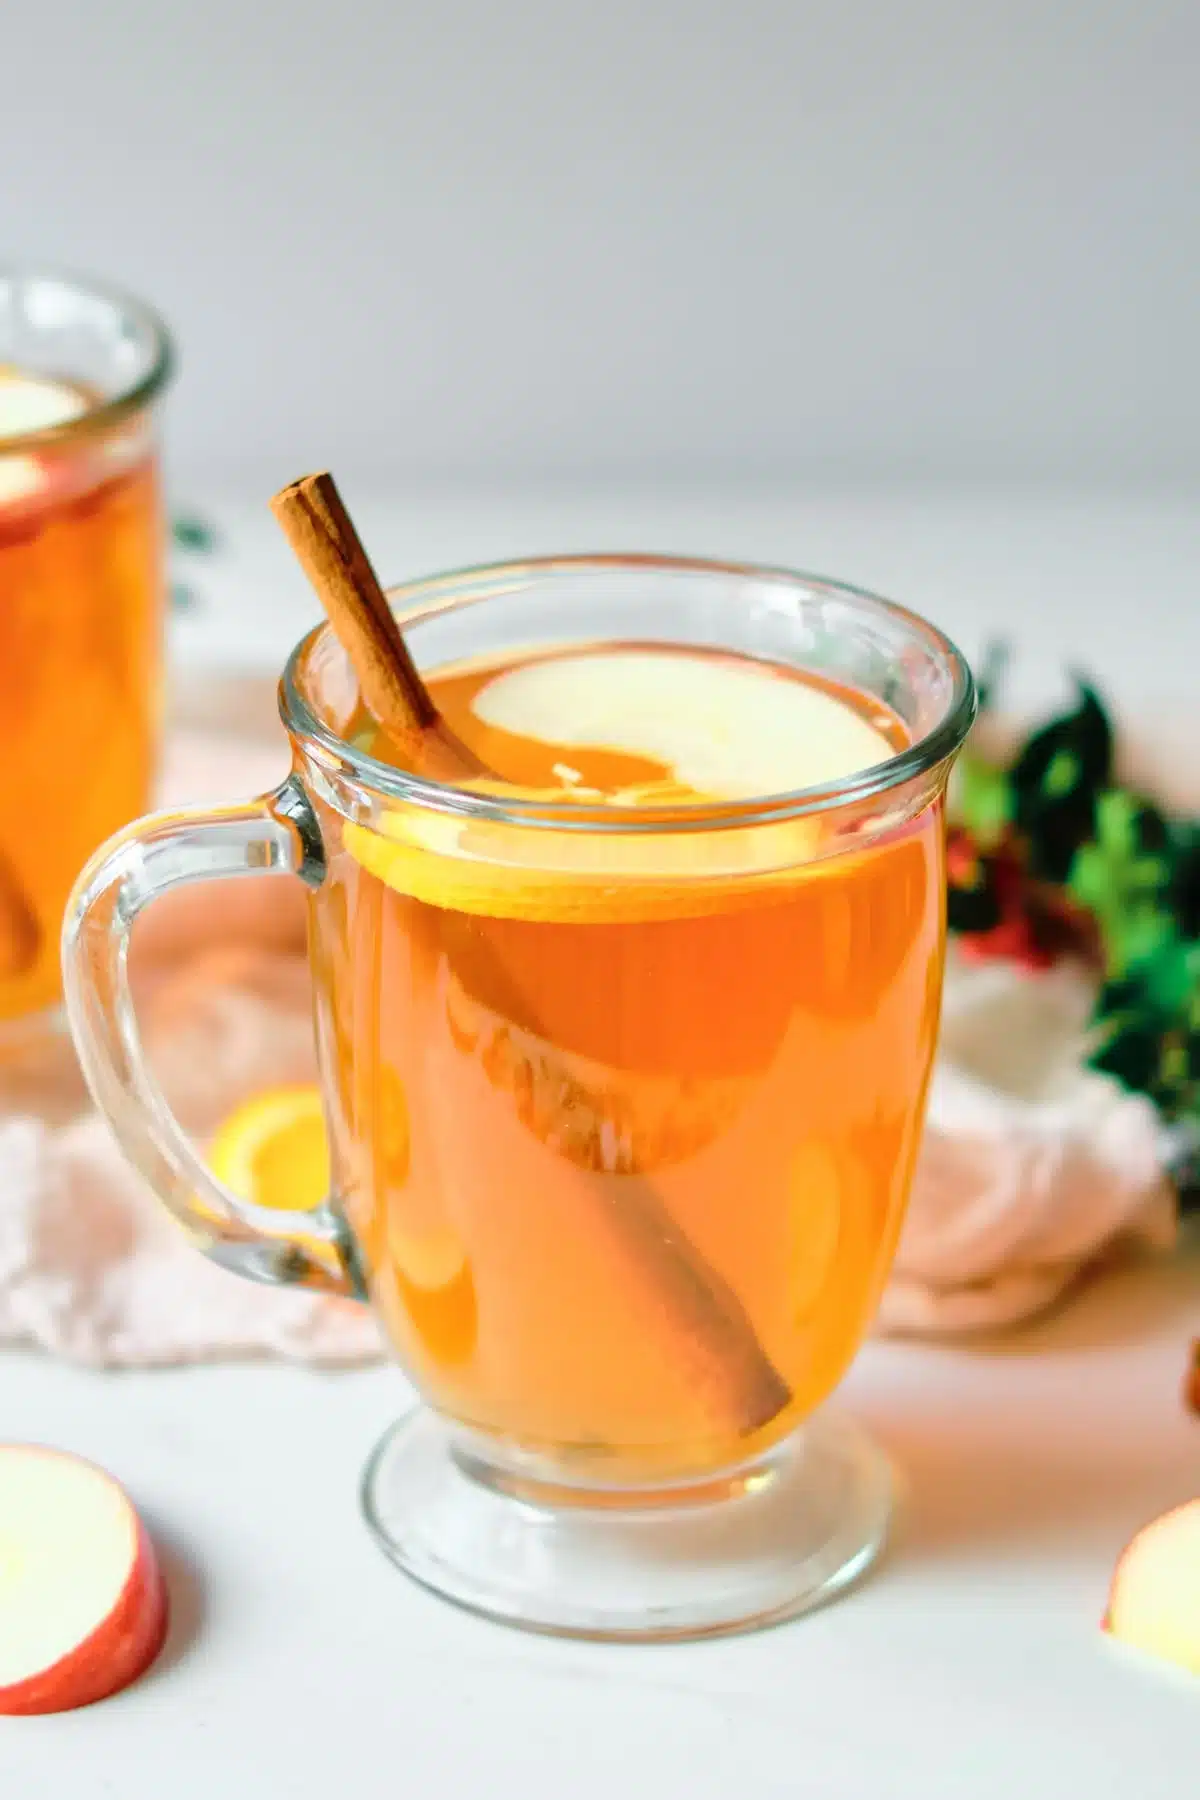 A glass of orange coloured tea with a lemon slice and a cinnamon stick.